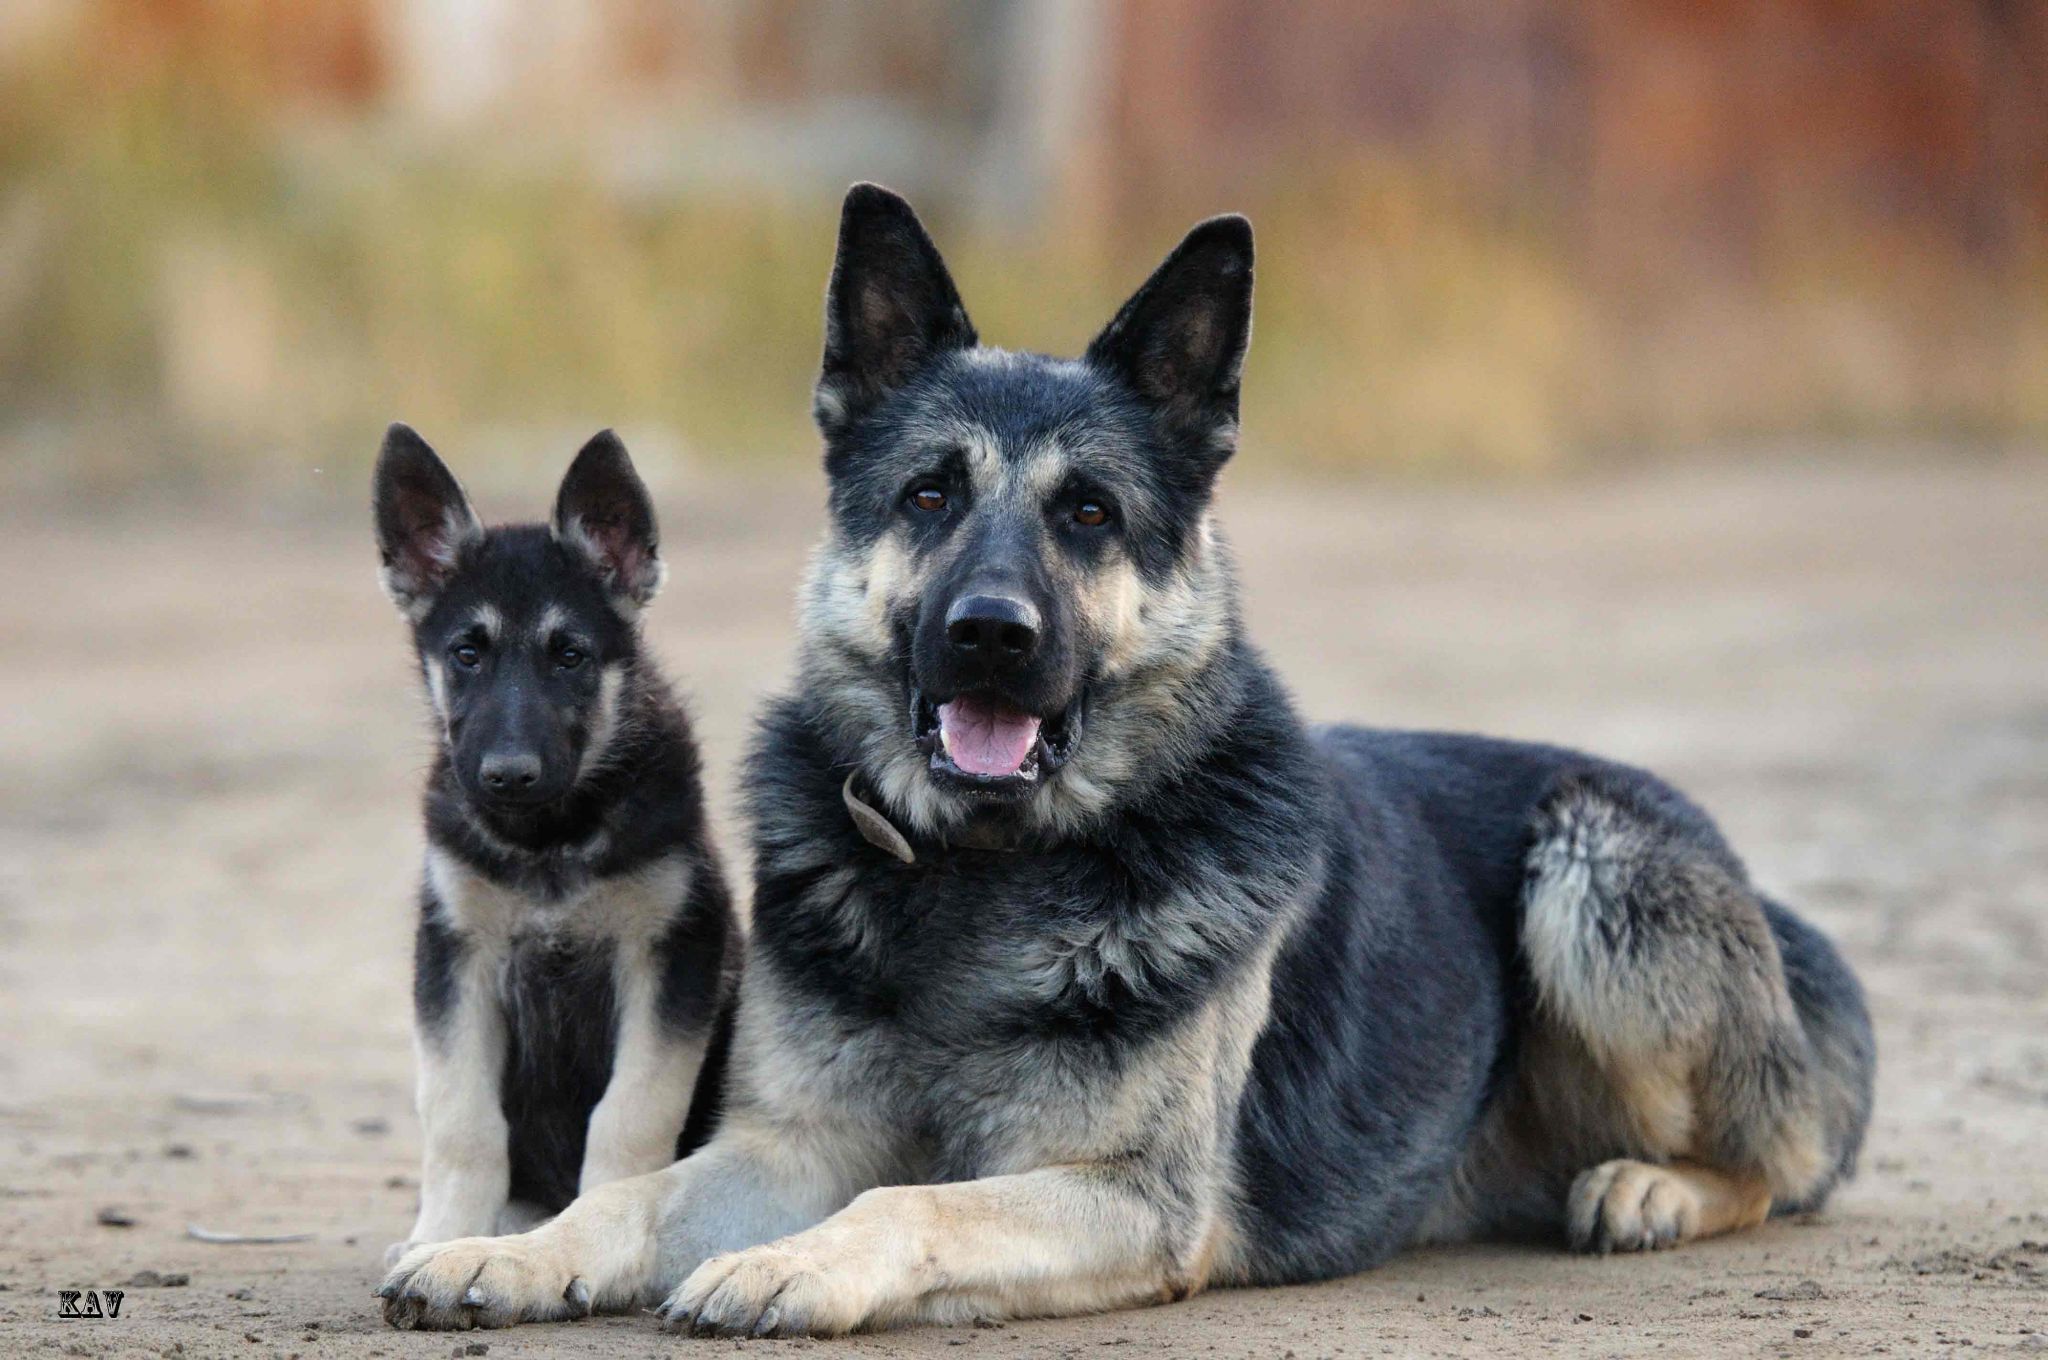 East European Shepherd with puppy